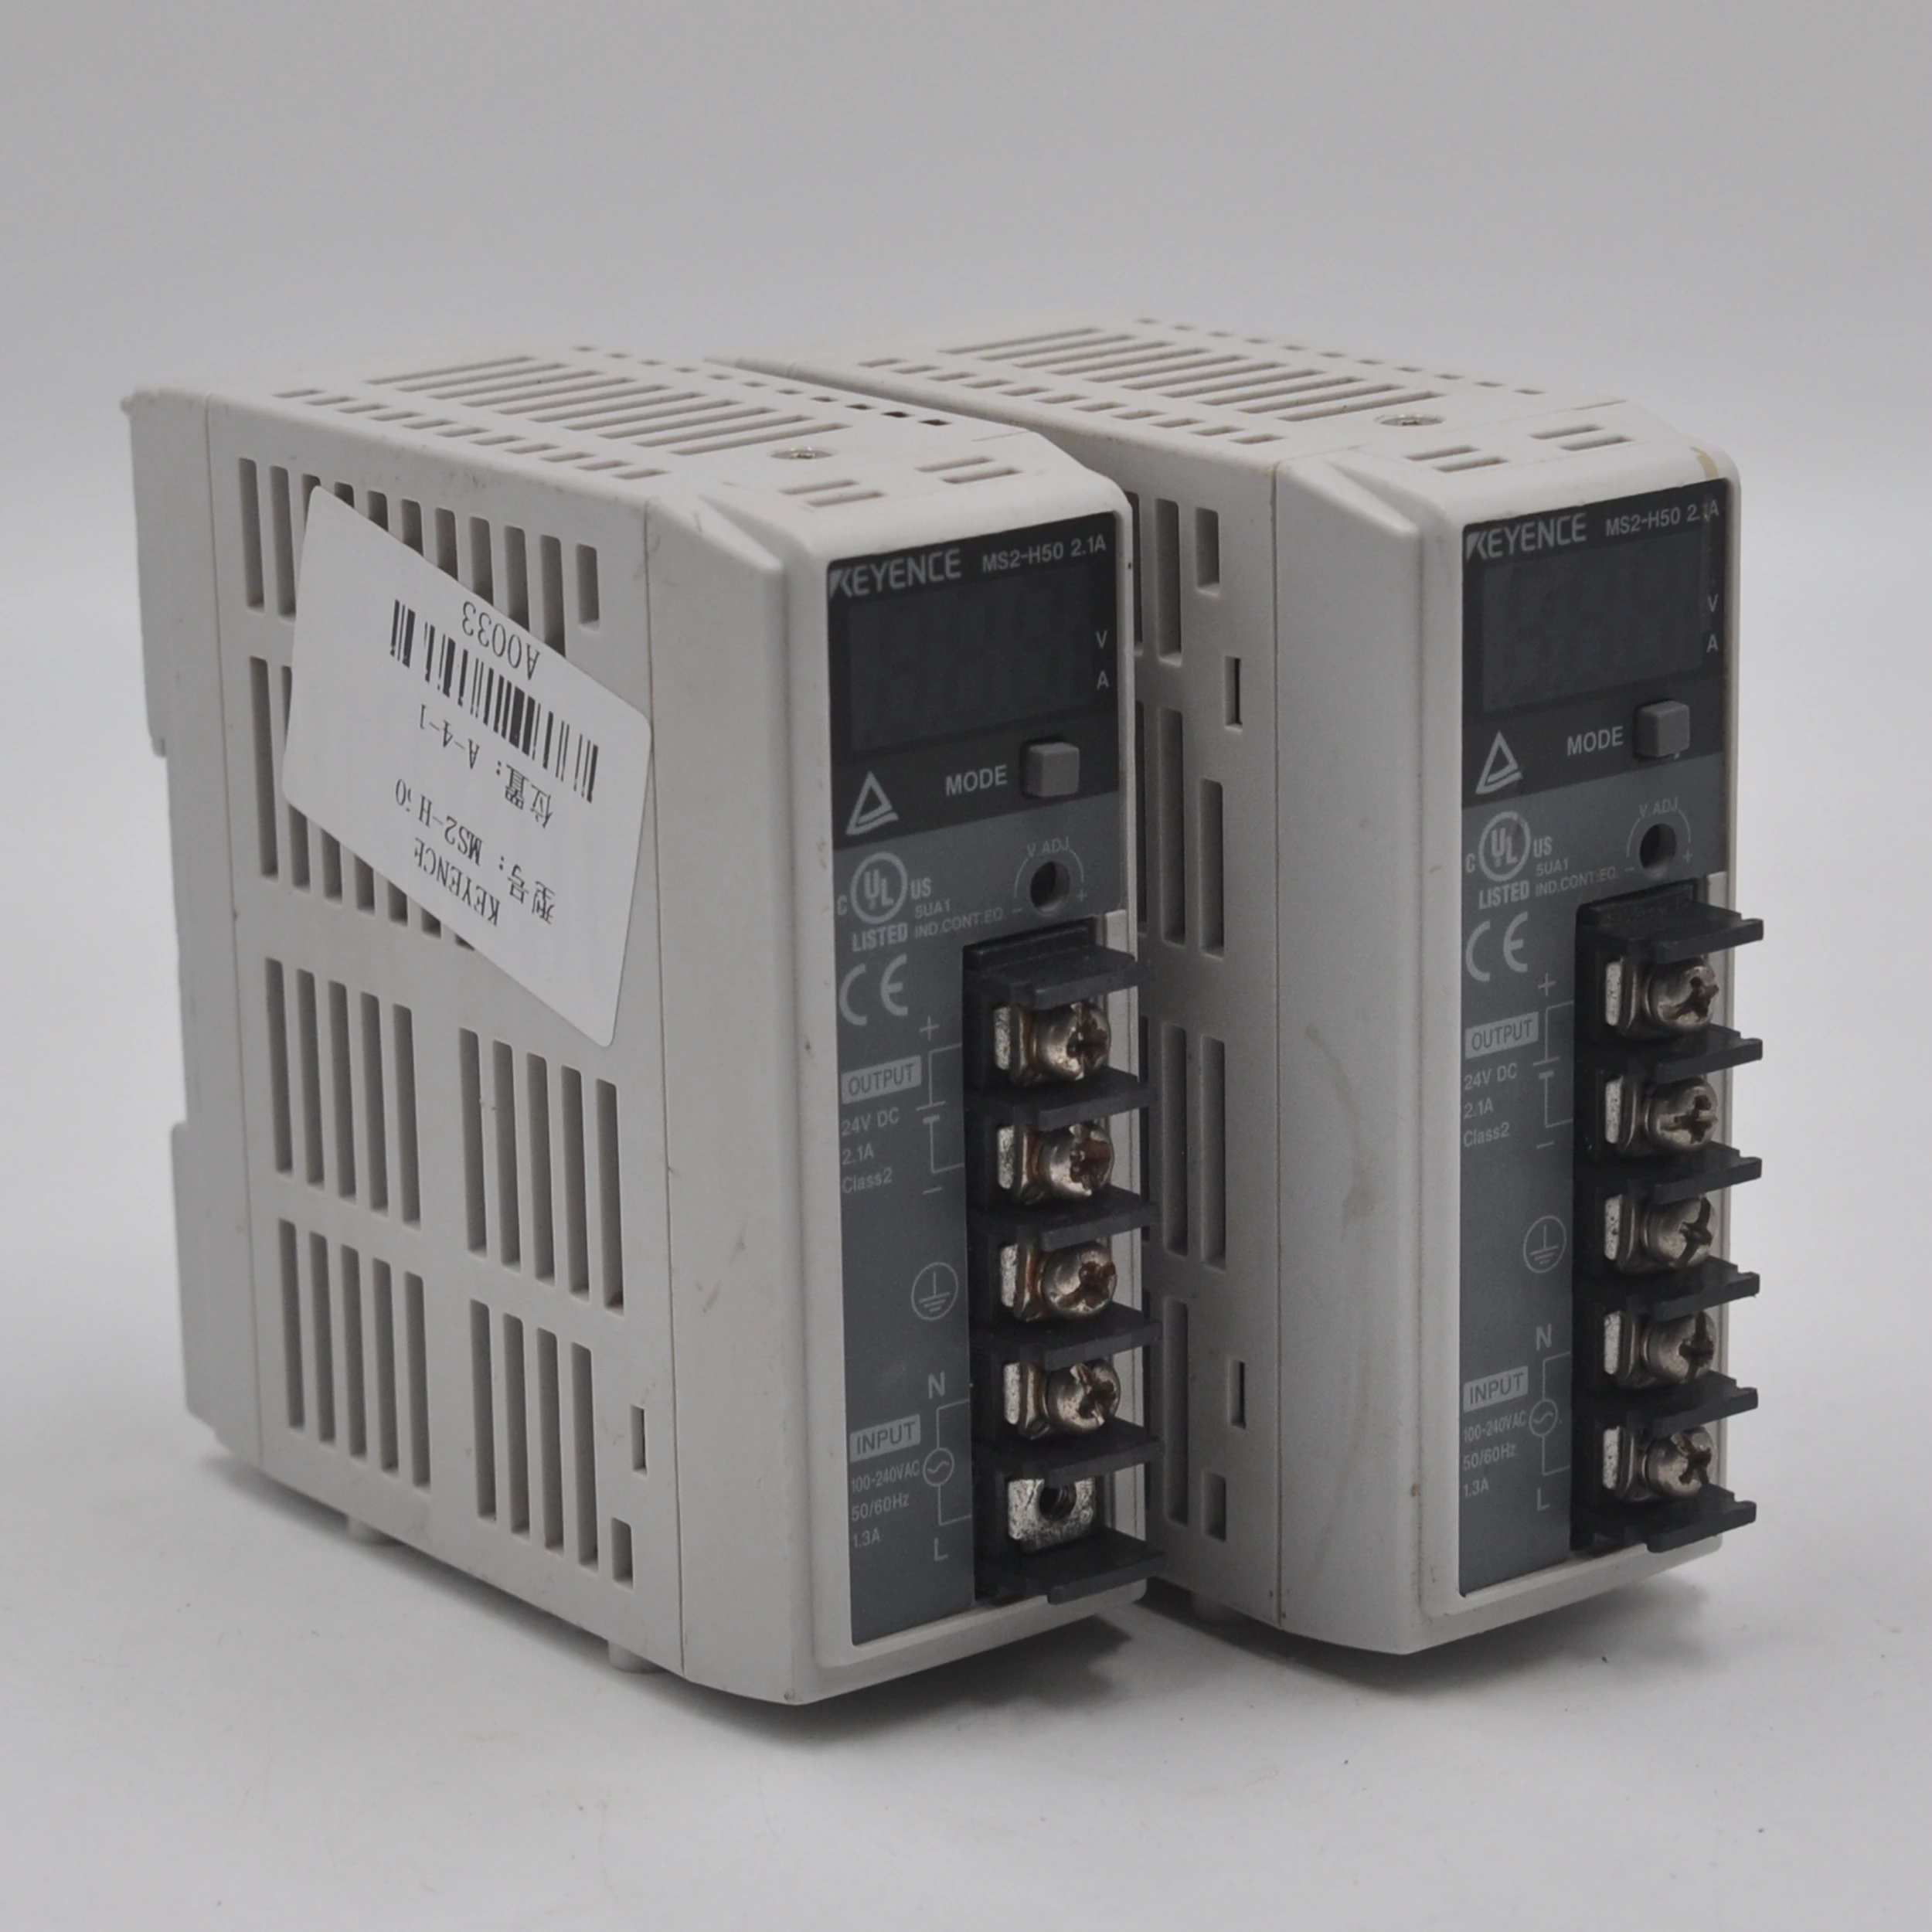 

KEYENCE MS-H50 switching power supply 2.1A 24V DC